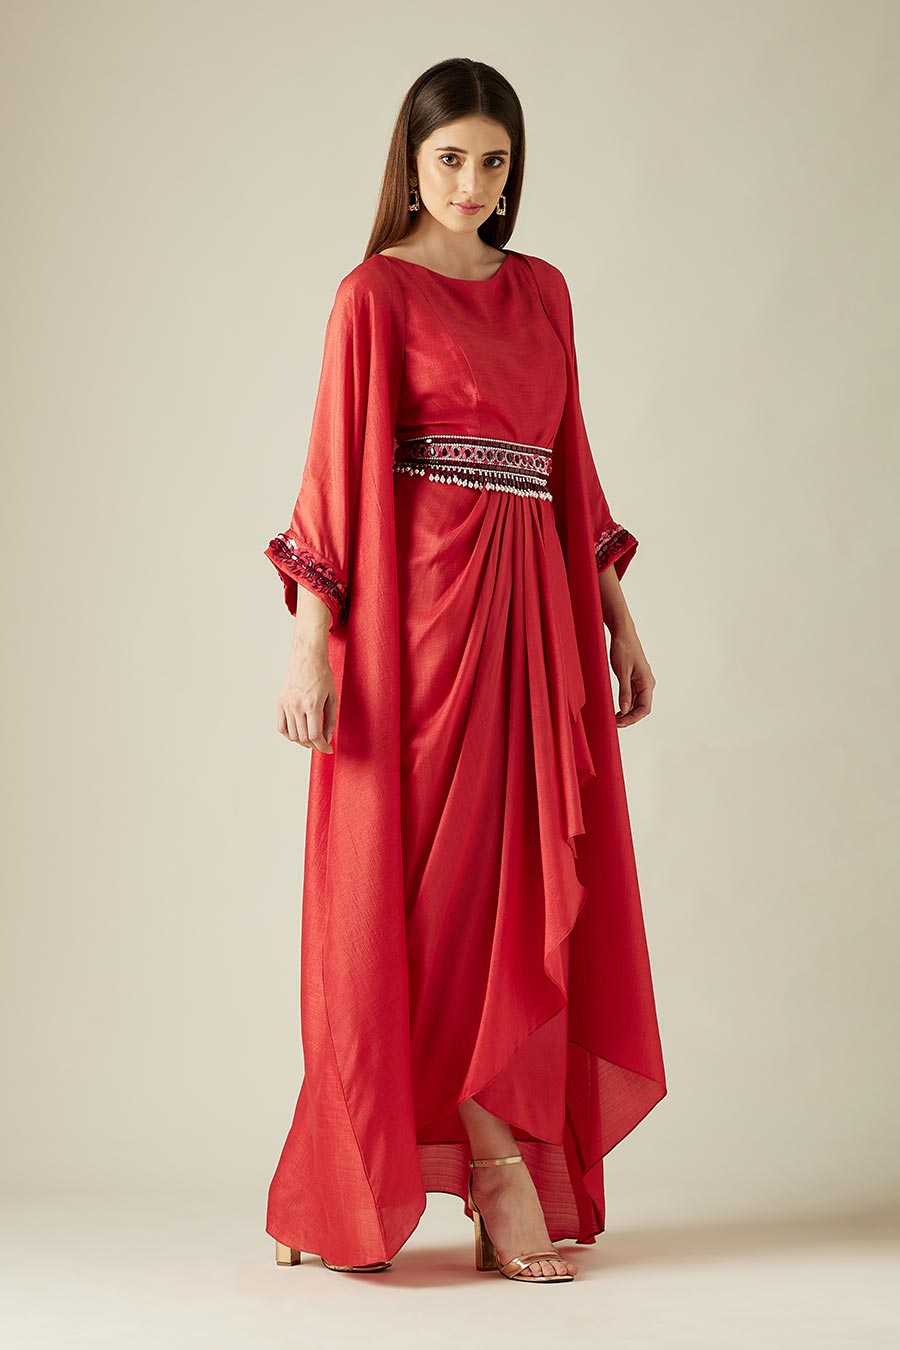 Scarlet Red Drape Dress & Cape Set